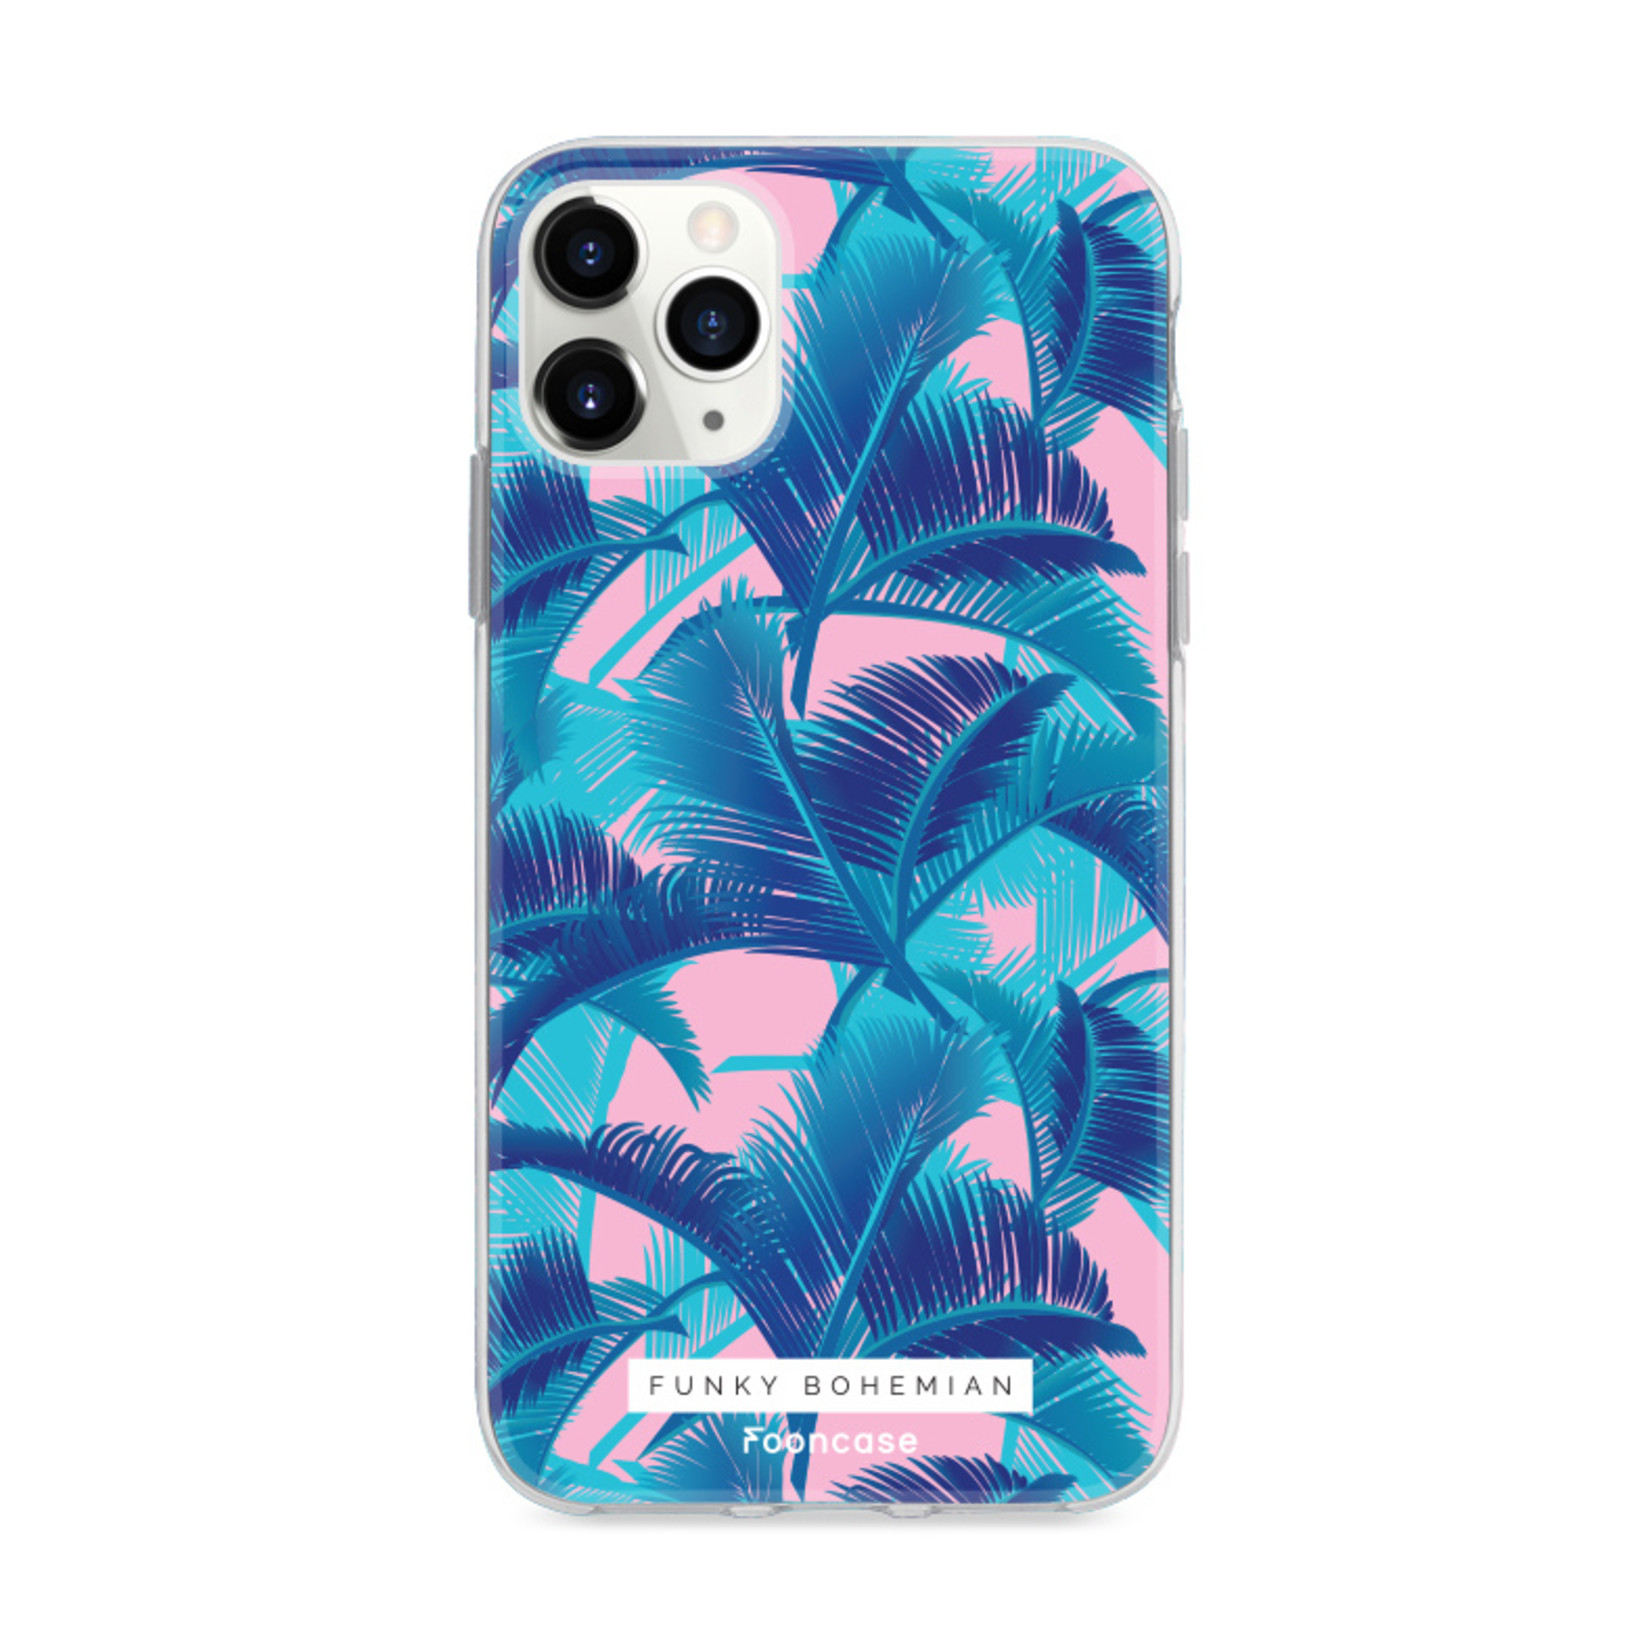 FOONCASE iPhone 11 Pro hoesje TPU Soft Case - Back Cover - Funky Bohemian / Blauw Roze Bladeren